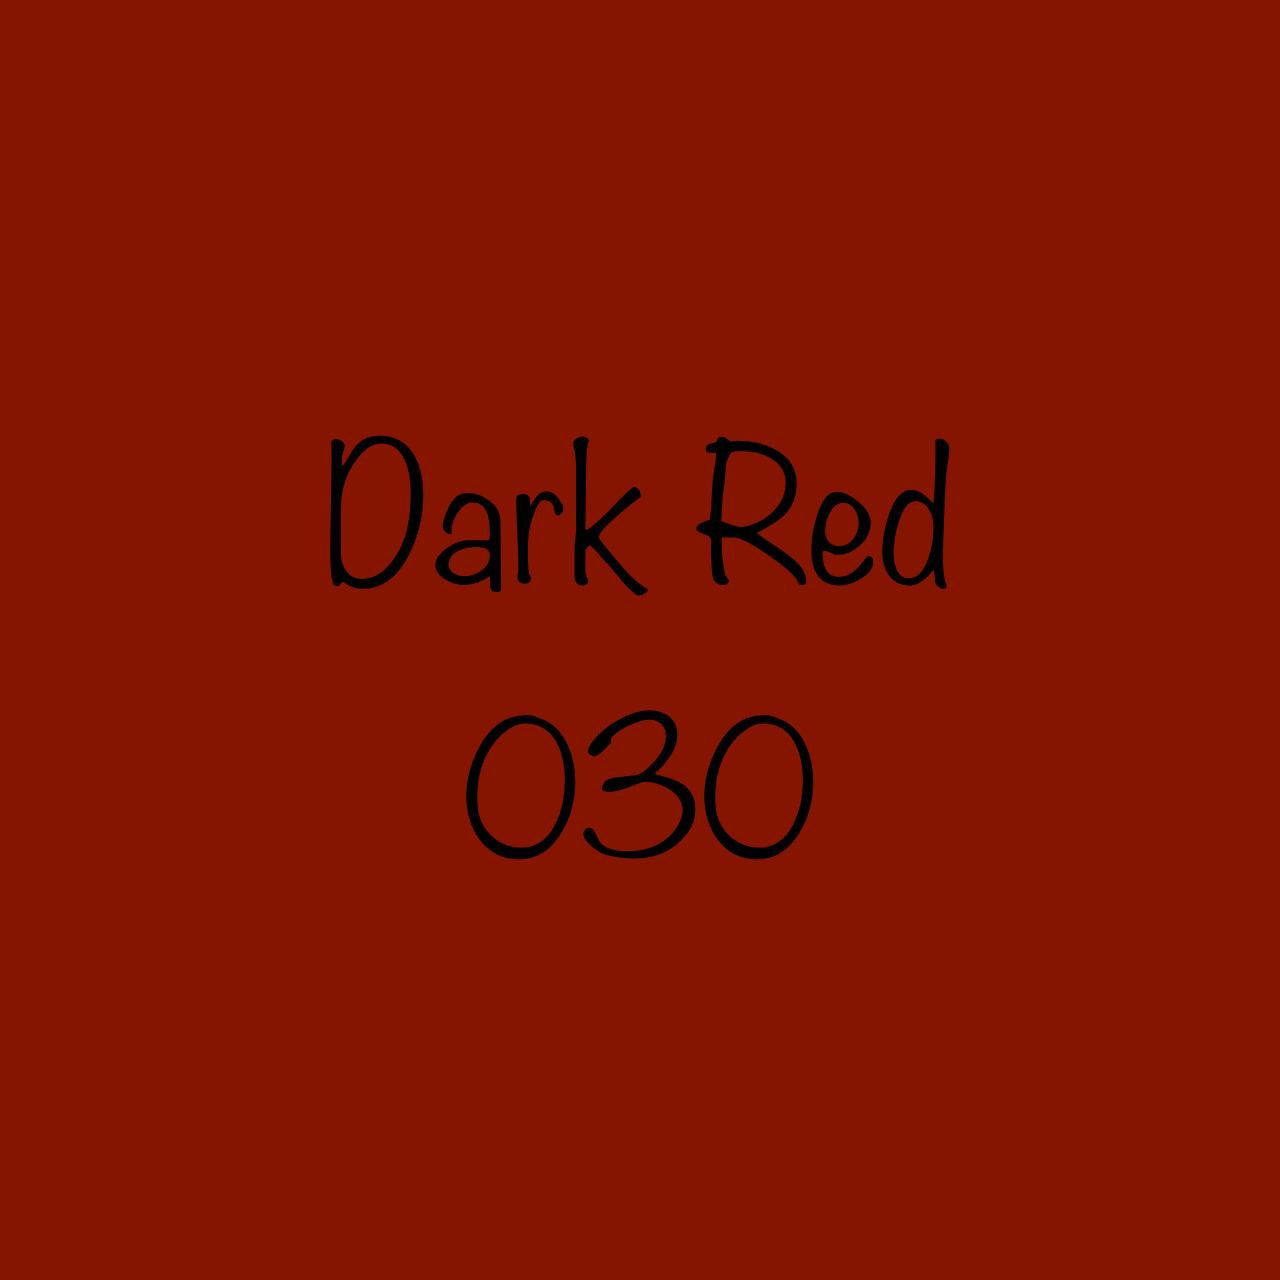 Oracal 651 Permanent Vinyl Dark Red (030)